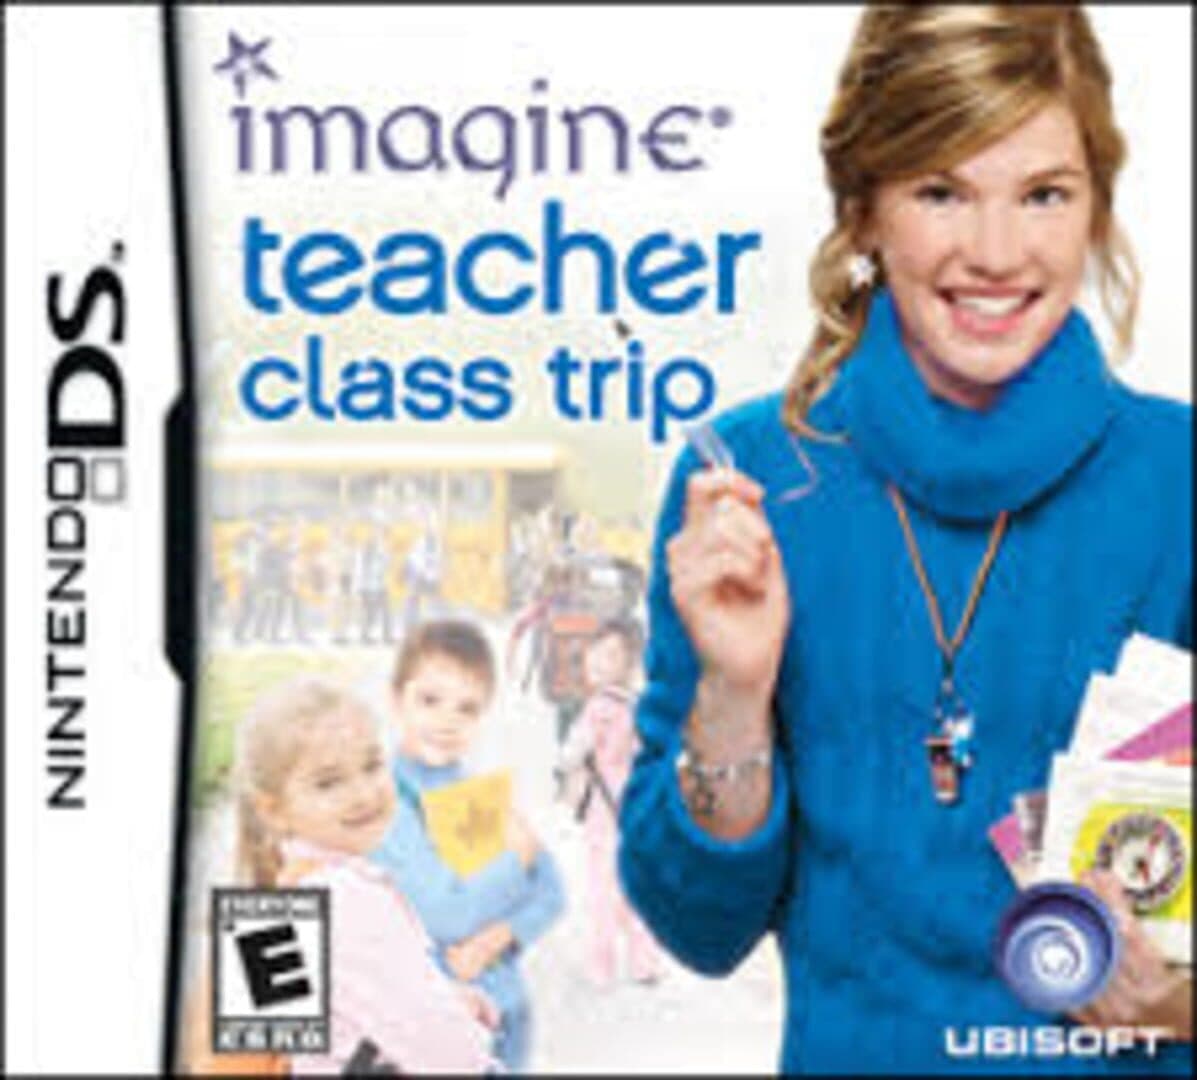 Imagine: Teacher - Class Trip cover art